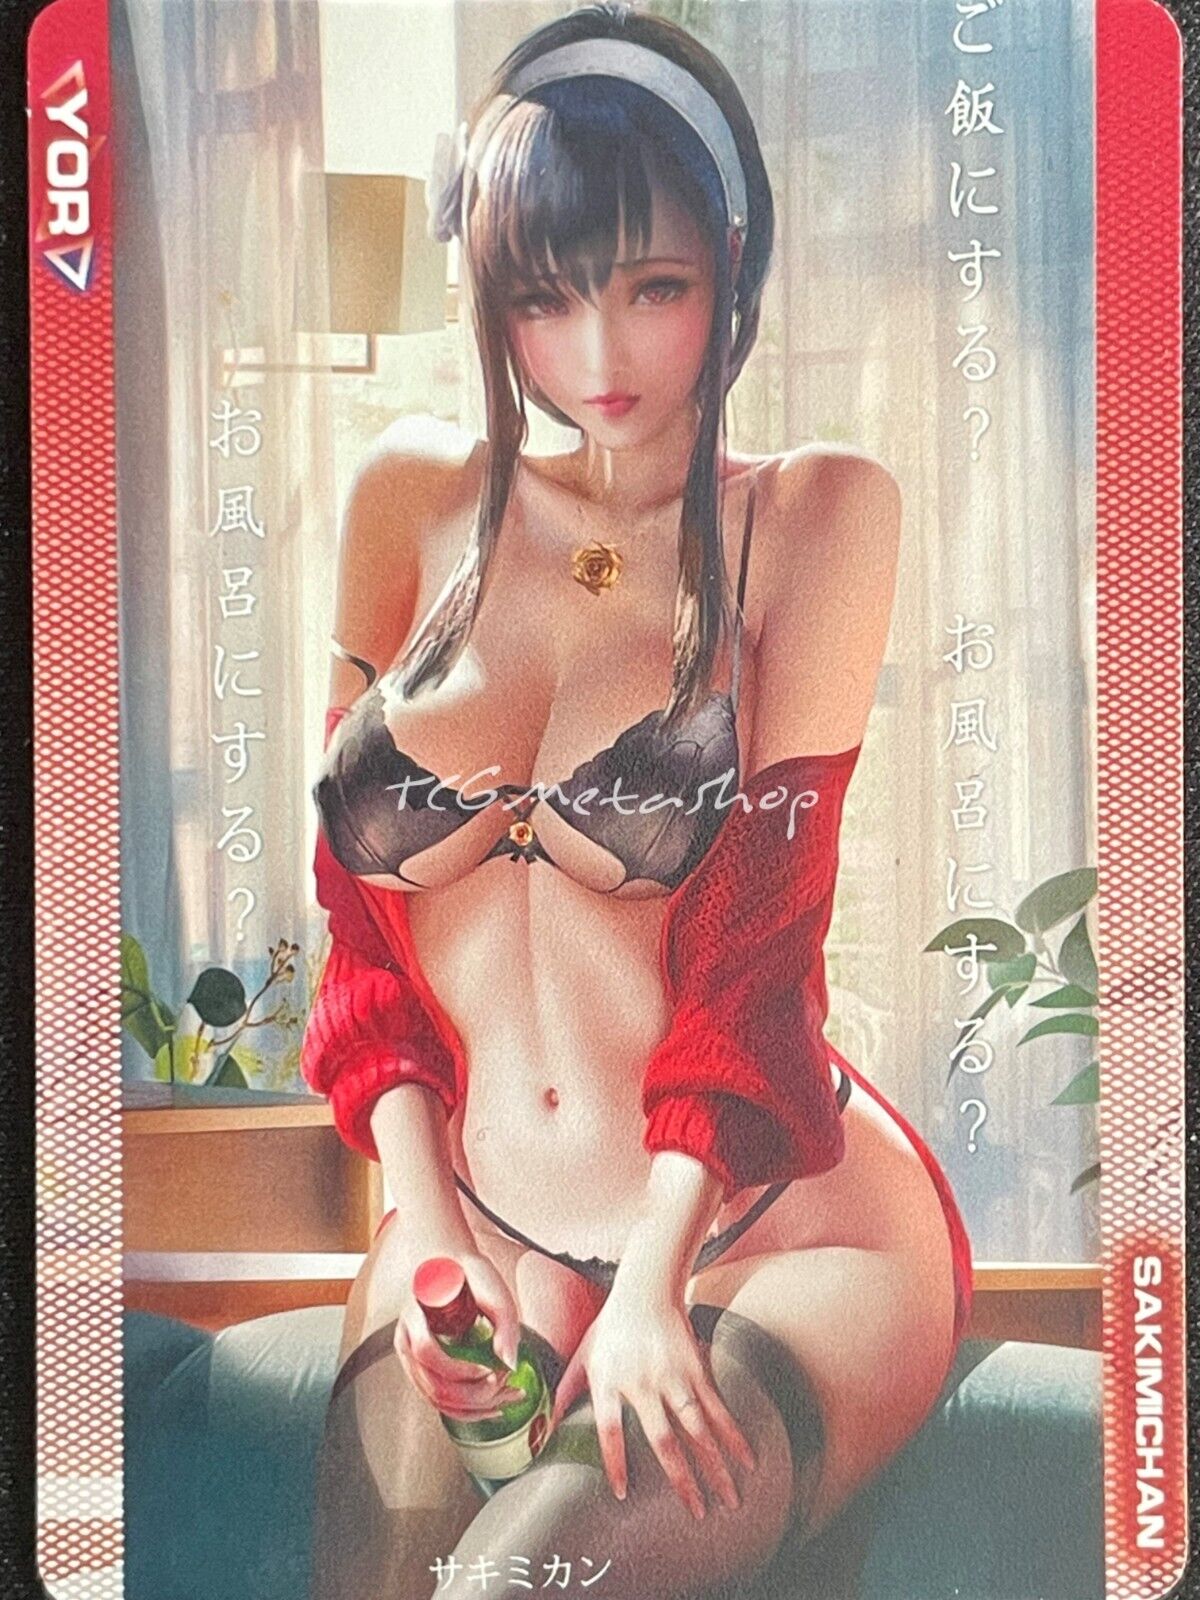 🔥 Yor Forger Spy x Family Goddess Story Anime Waifu Card ACG B 41 🔥